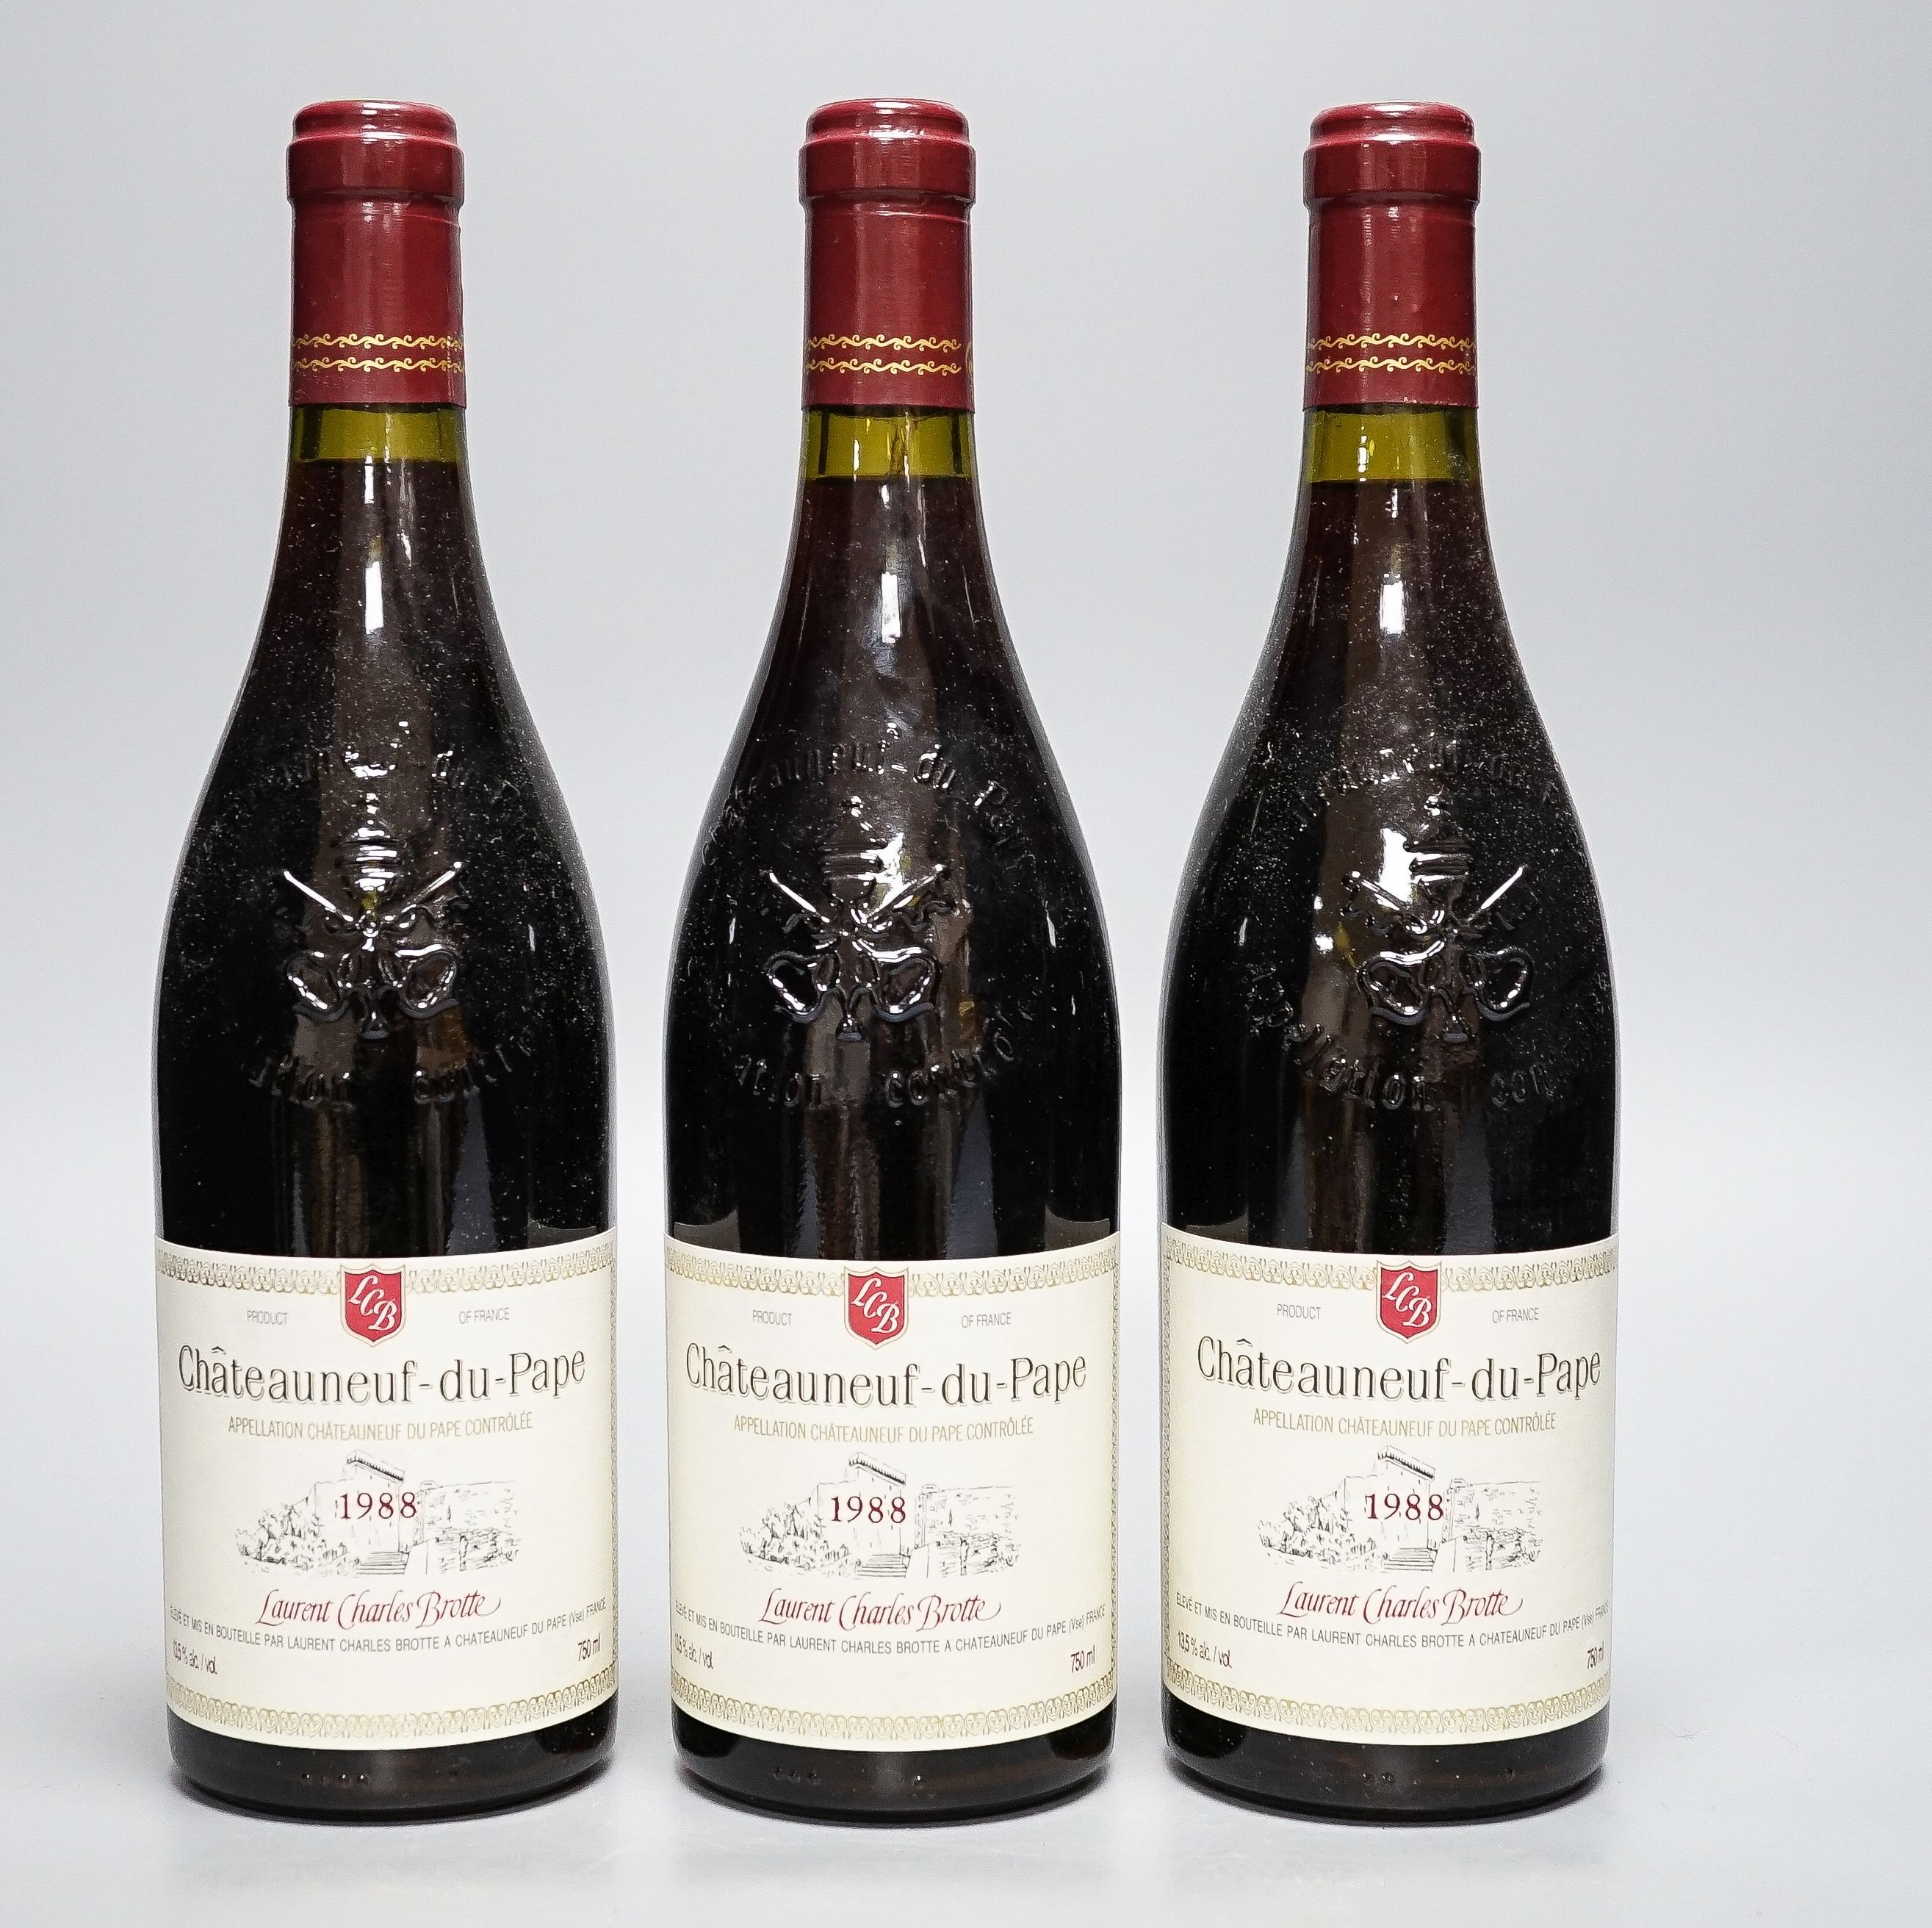 Five bottles of Laurent Charles Brotte Chateauneuf du Pape, 1988, 75cl.